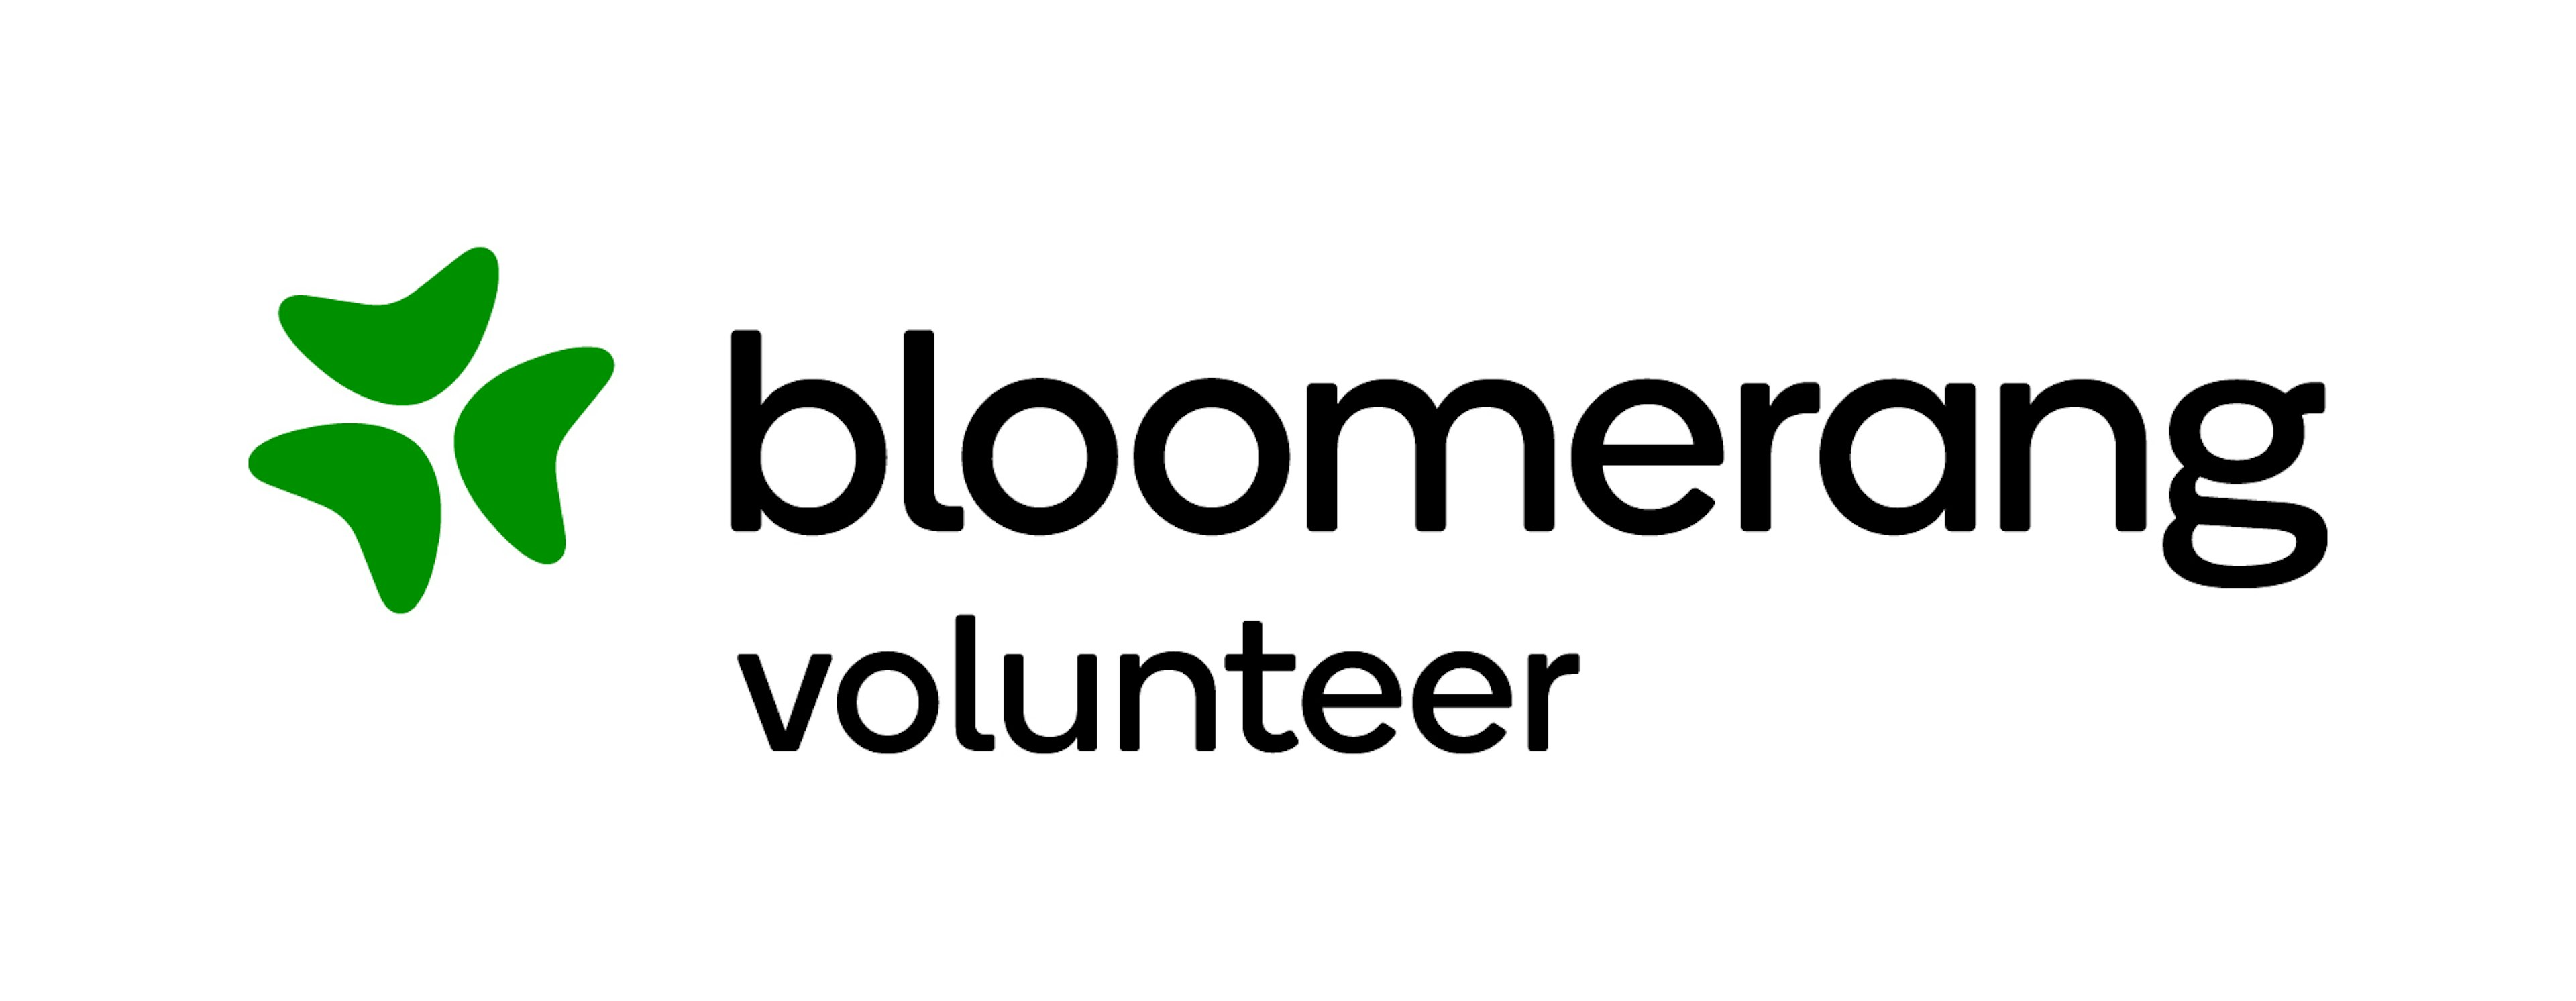 Bloomerang Volunteer Logo